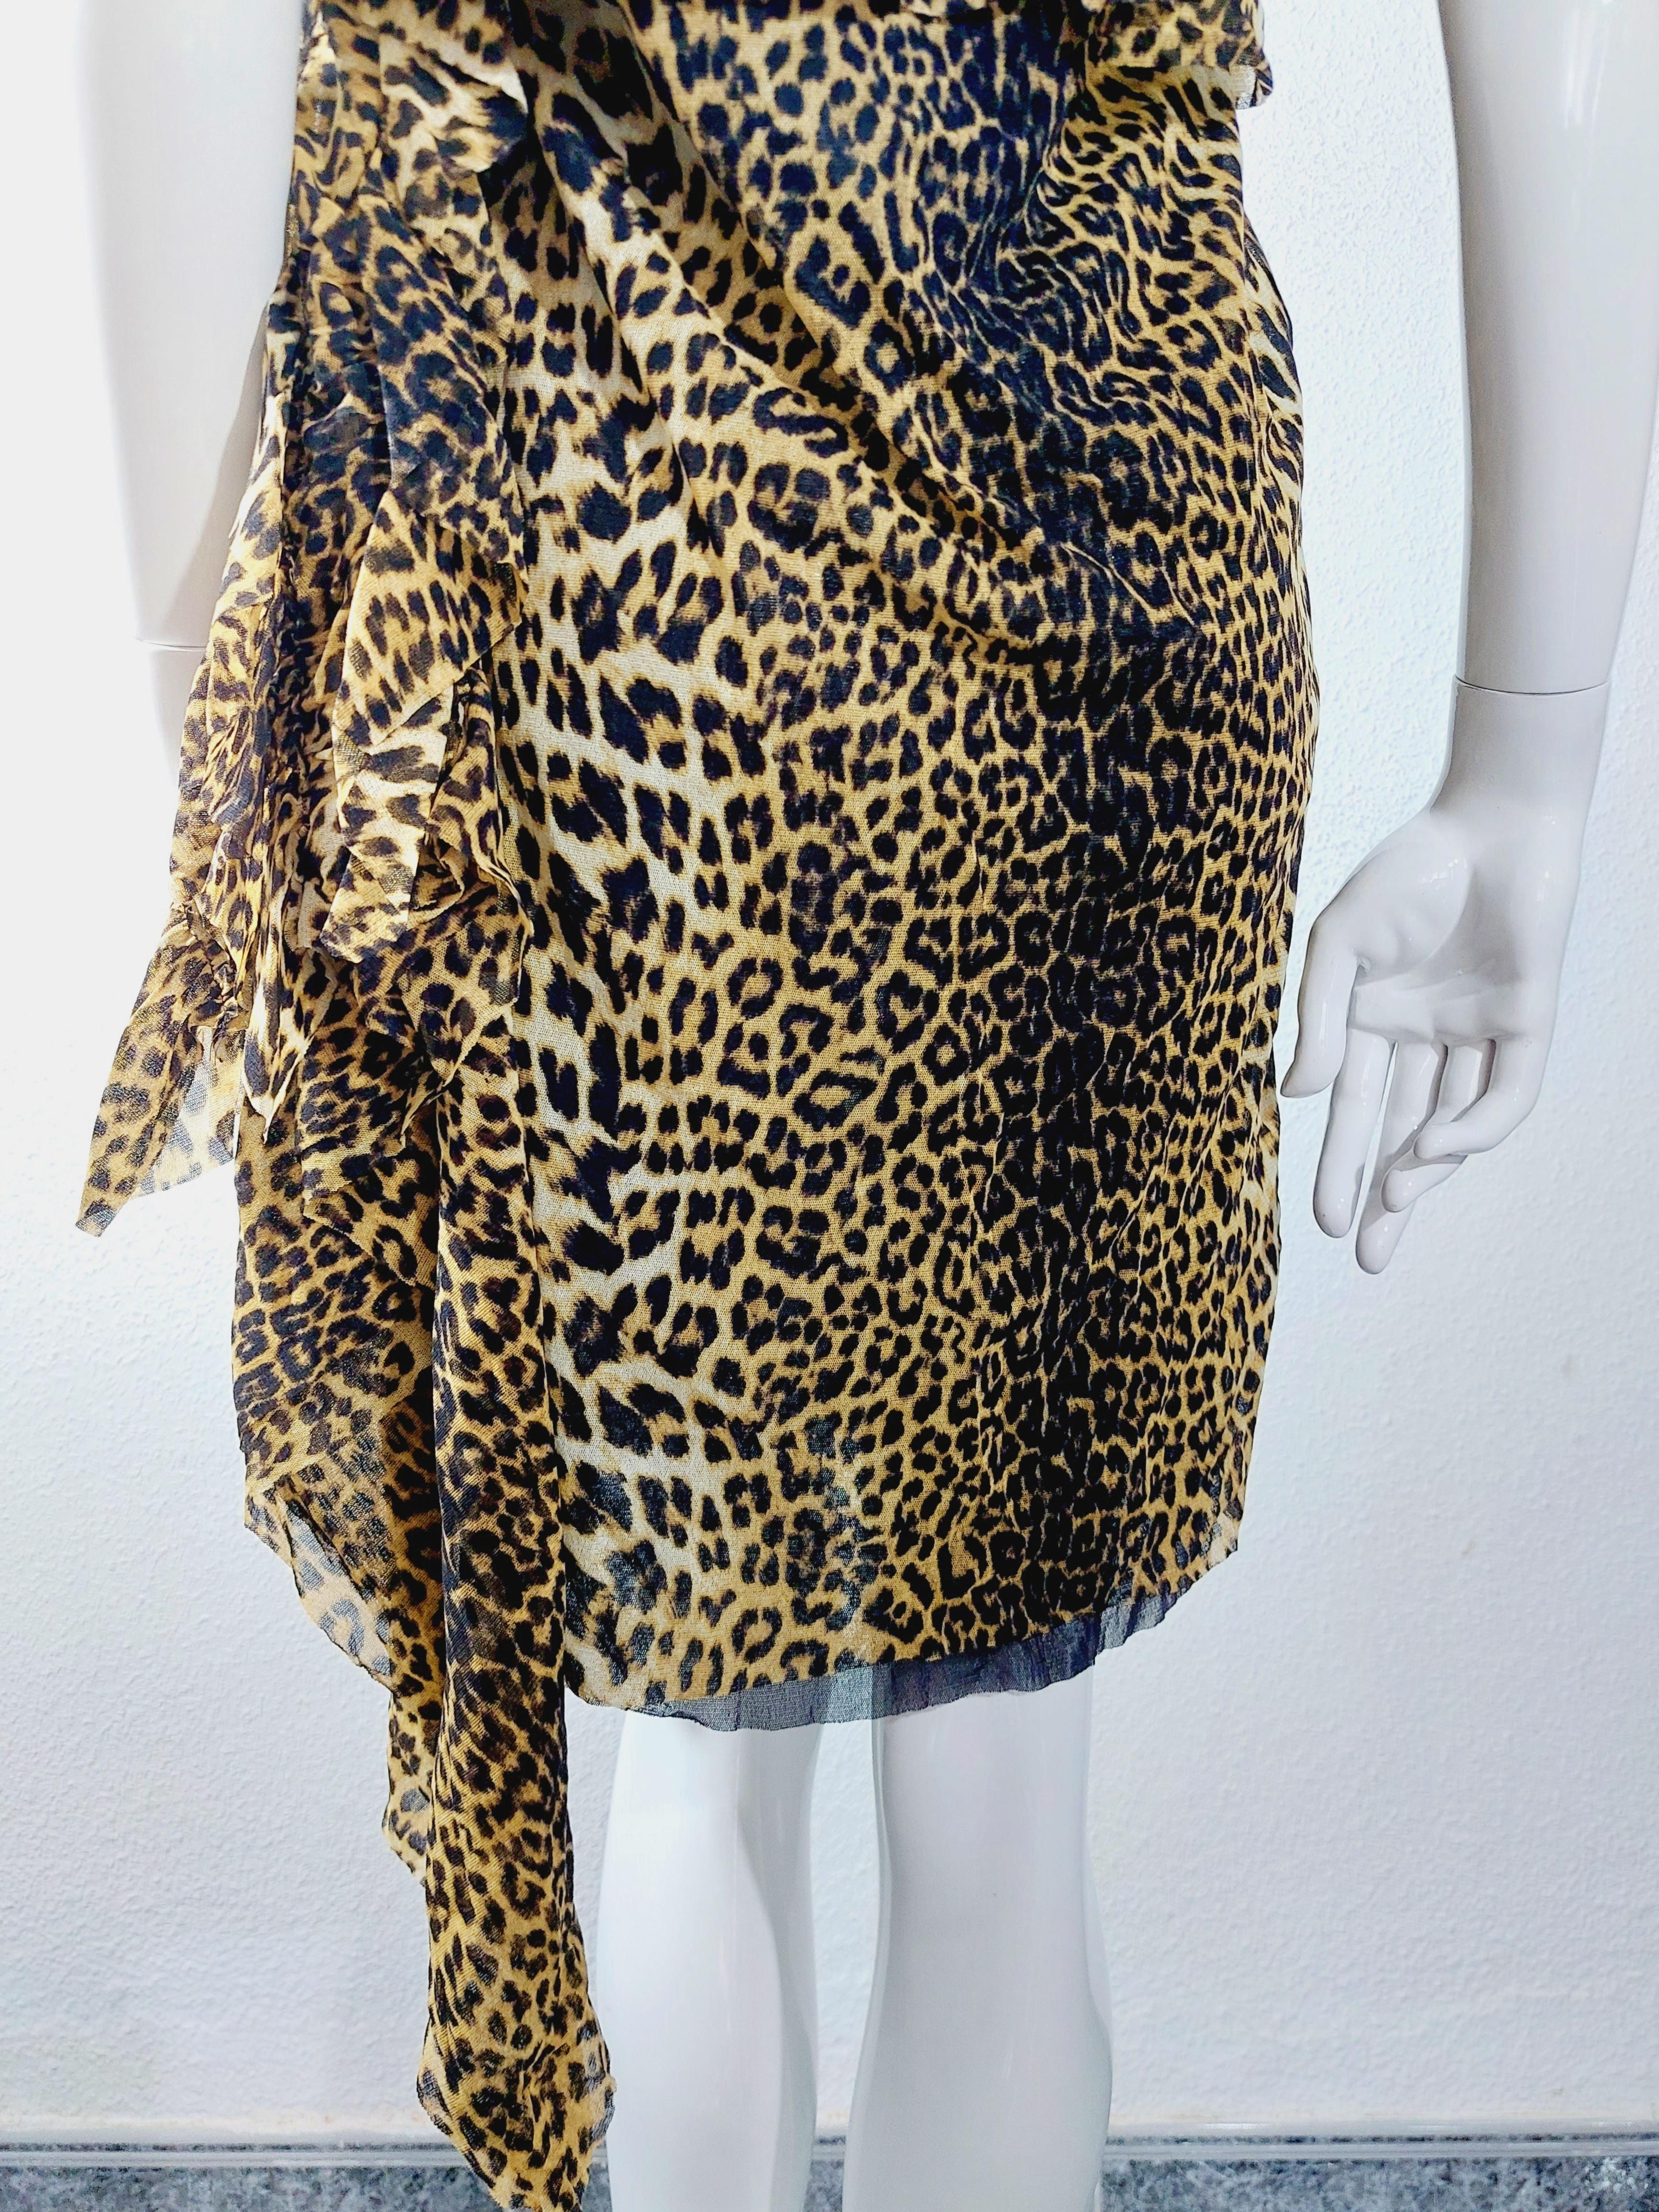 Jean Paul Gaultier 1990s Leopard Asymmetrical Cheetah Animal Mesh Ruffled Dress For Sale 1